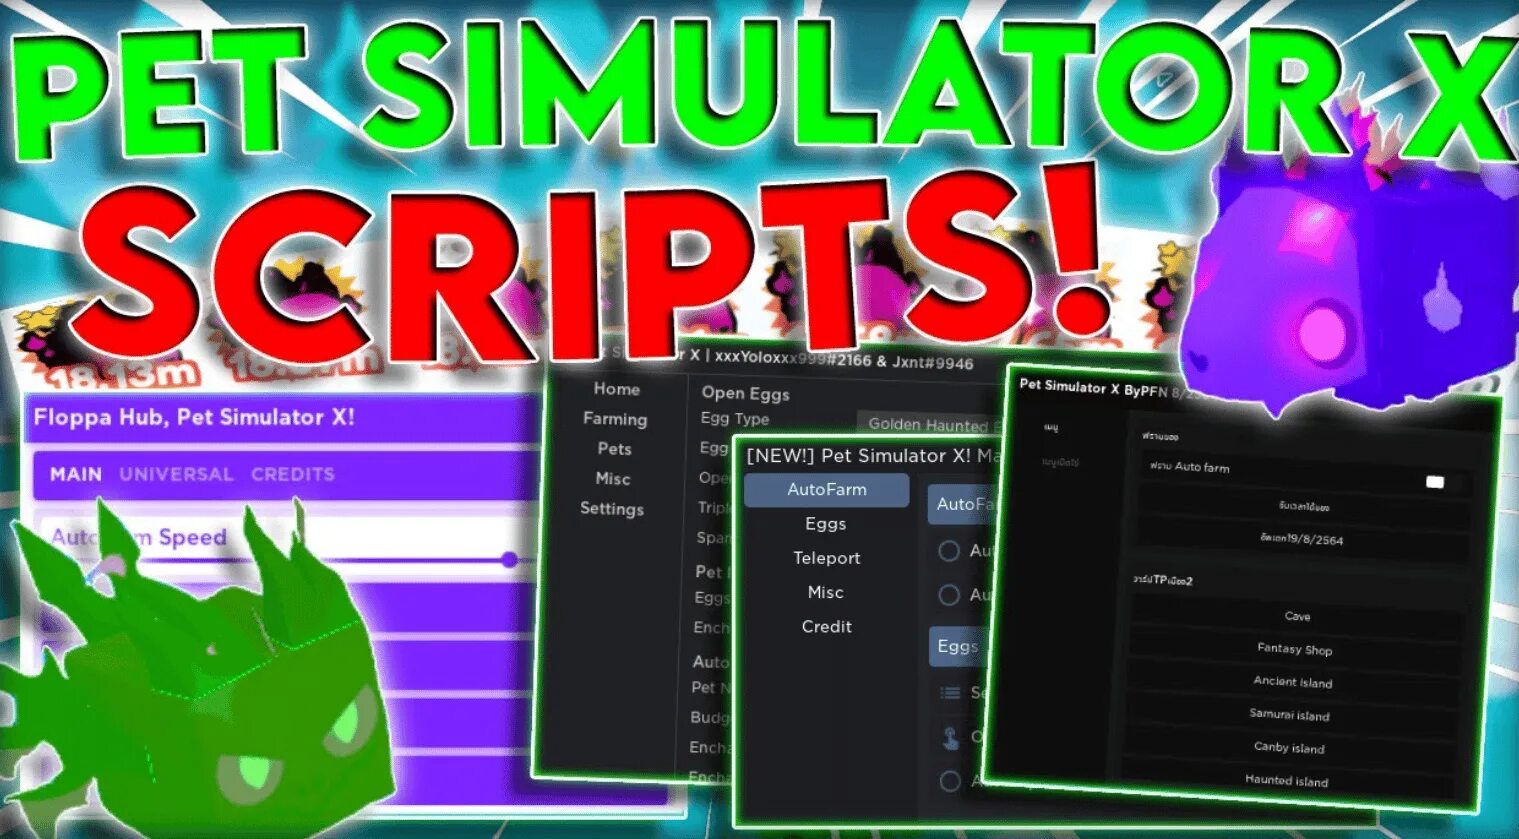 Pet Simulator x script. Pet Simulator script. Pet Simulator x script Hack. Roblox Pet Simulator x Hack. Script x roblox